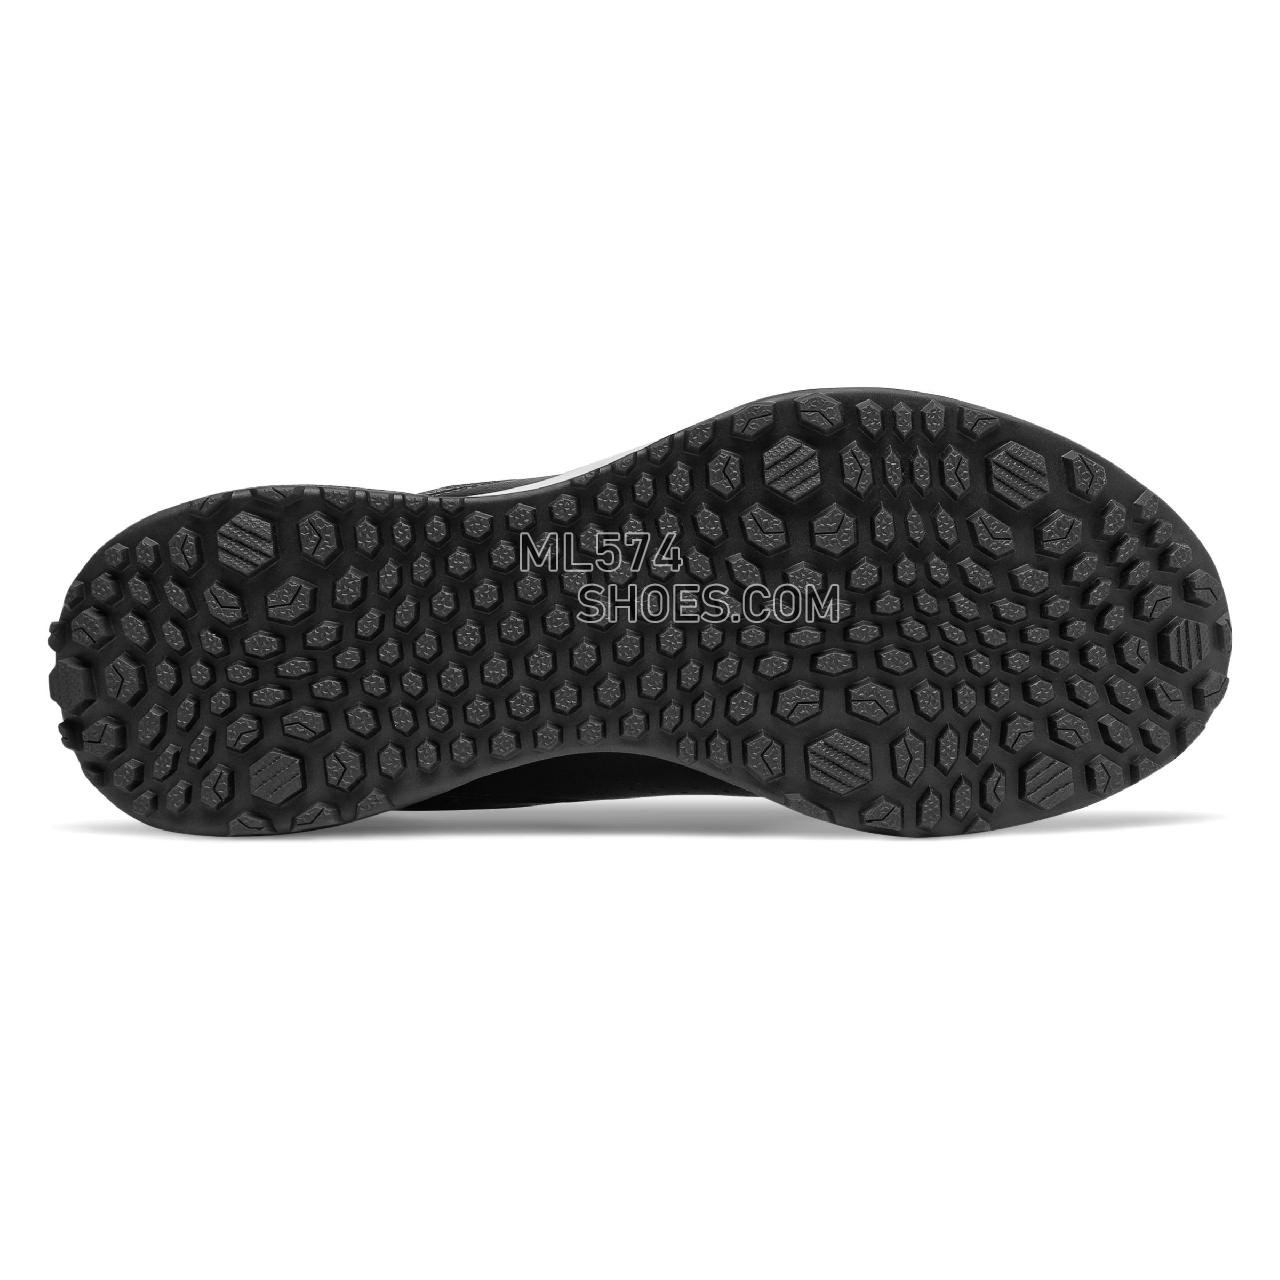 New Balance 950v3 - Men's Umpire Footwear - Black with White - MUM950T3